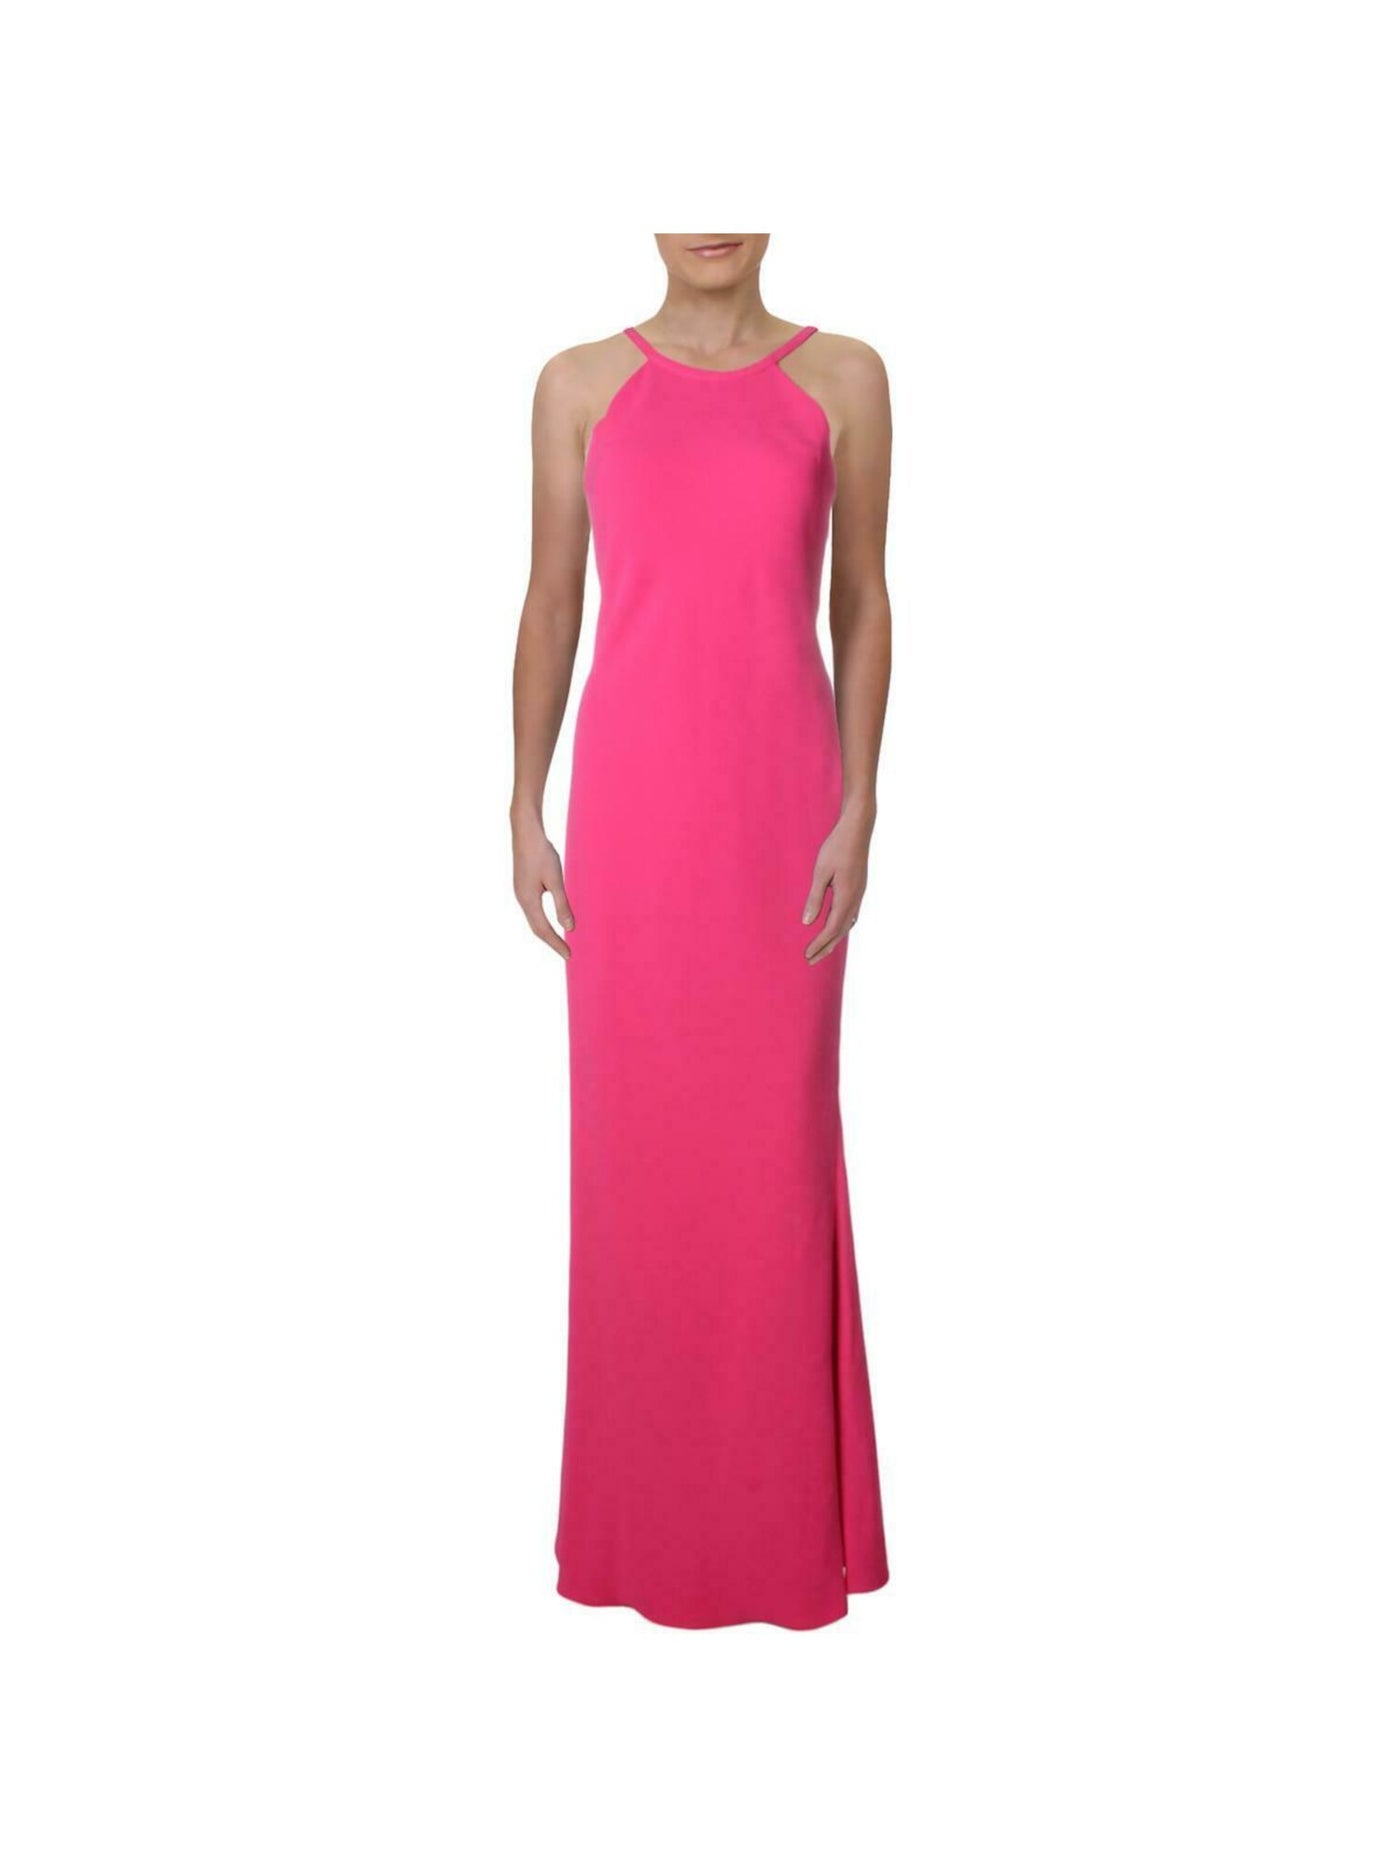 CALVIN KLEIN Womens Pink Sleeveless Halter Full-Length Evening Sheath Dress 2